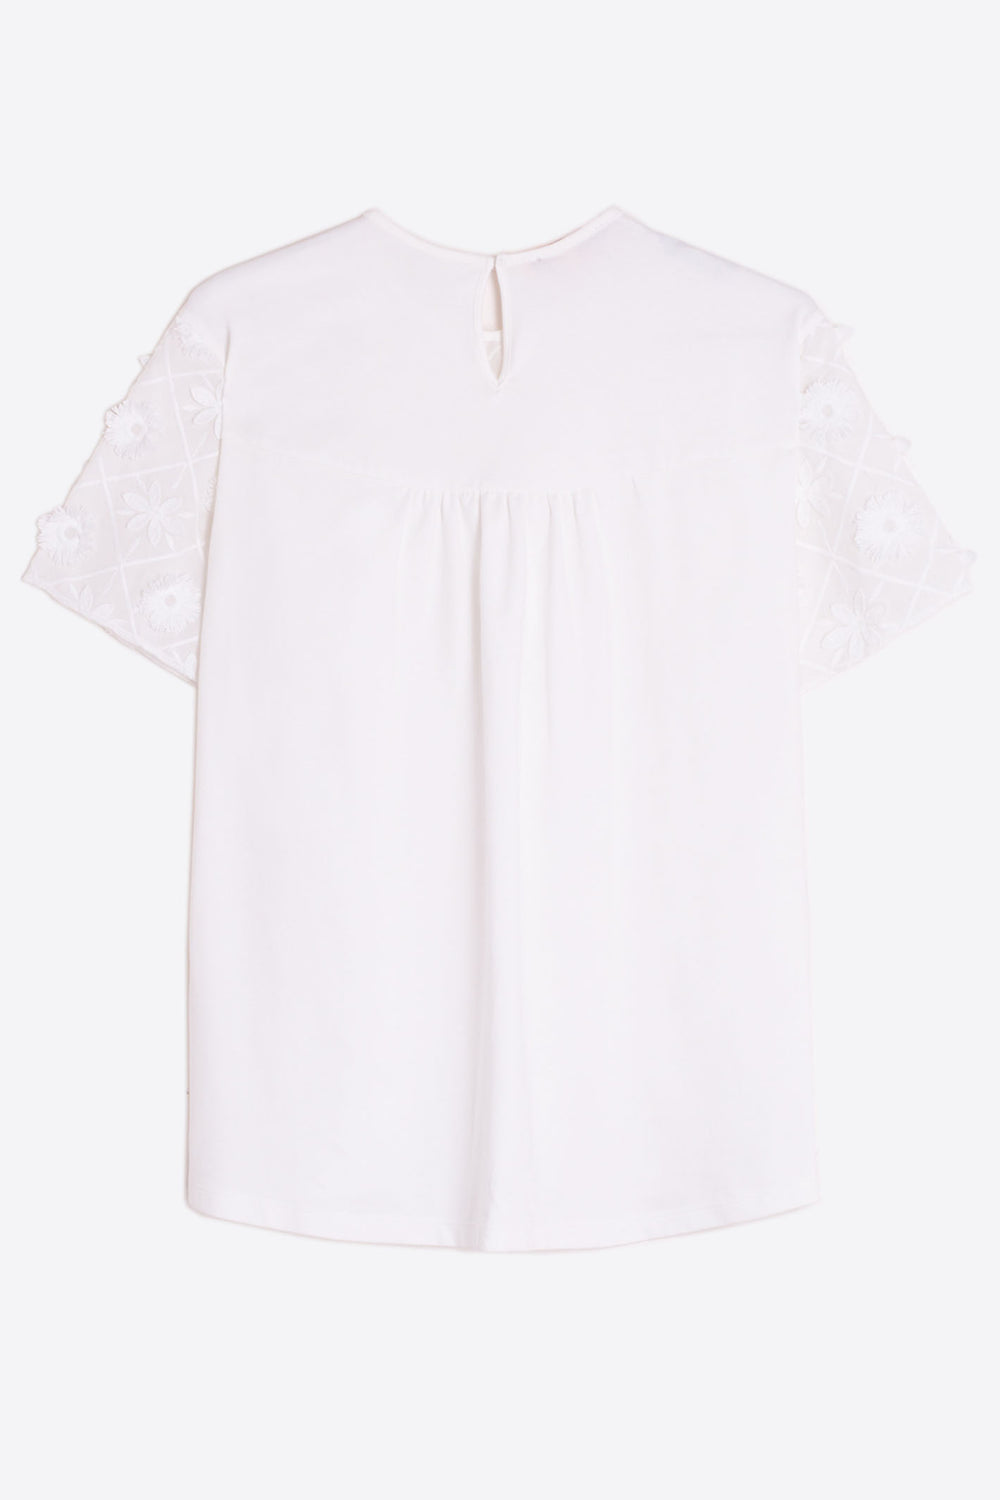 Vilagallo 30894 White Flower Embellished Short Sleeve Top - Olivia Grace Fashion